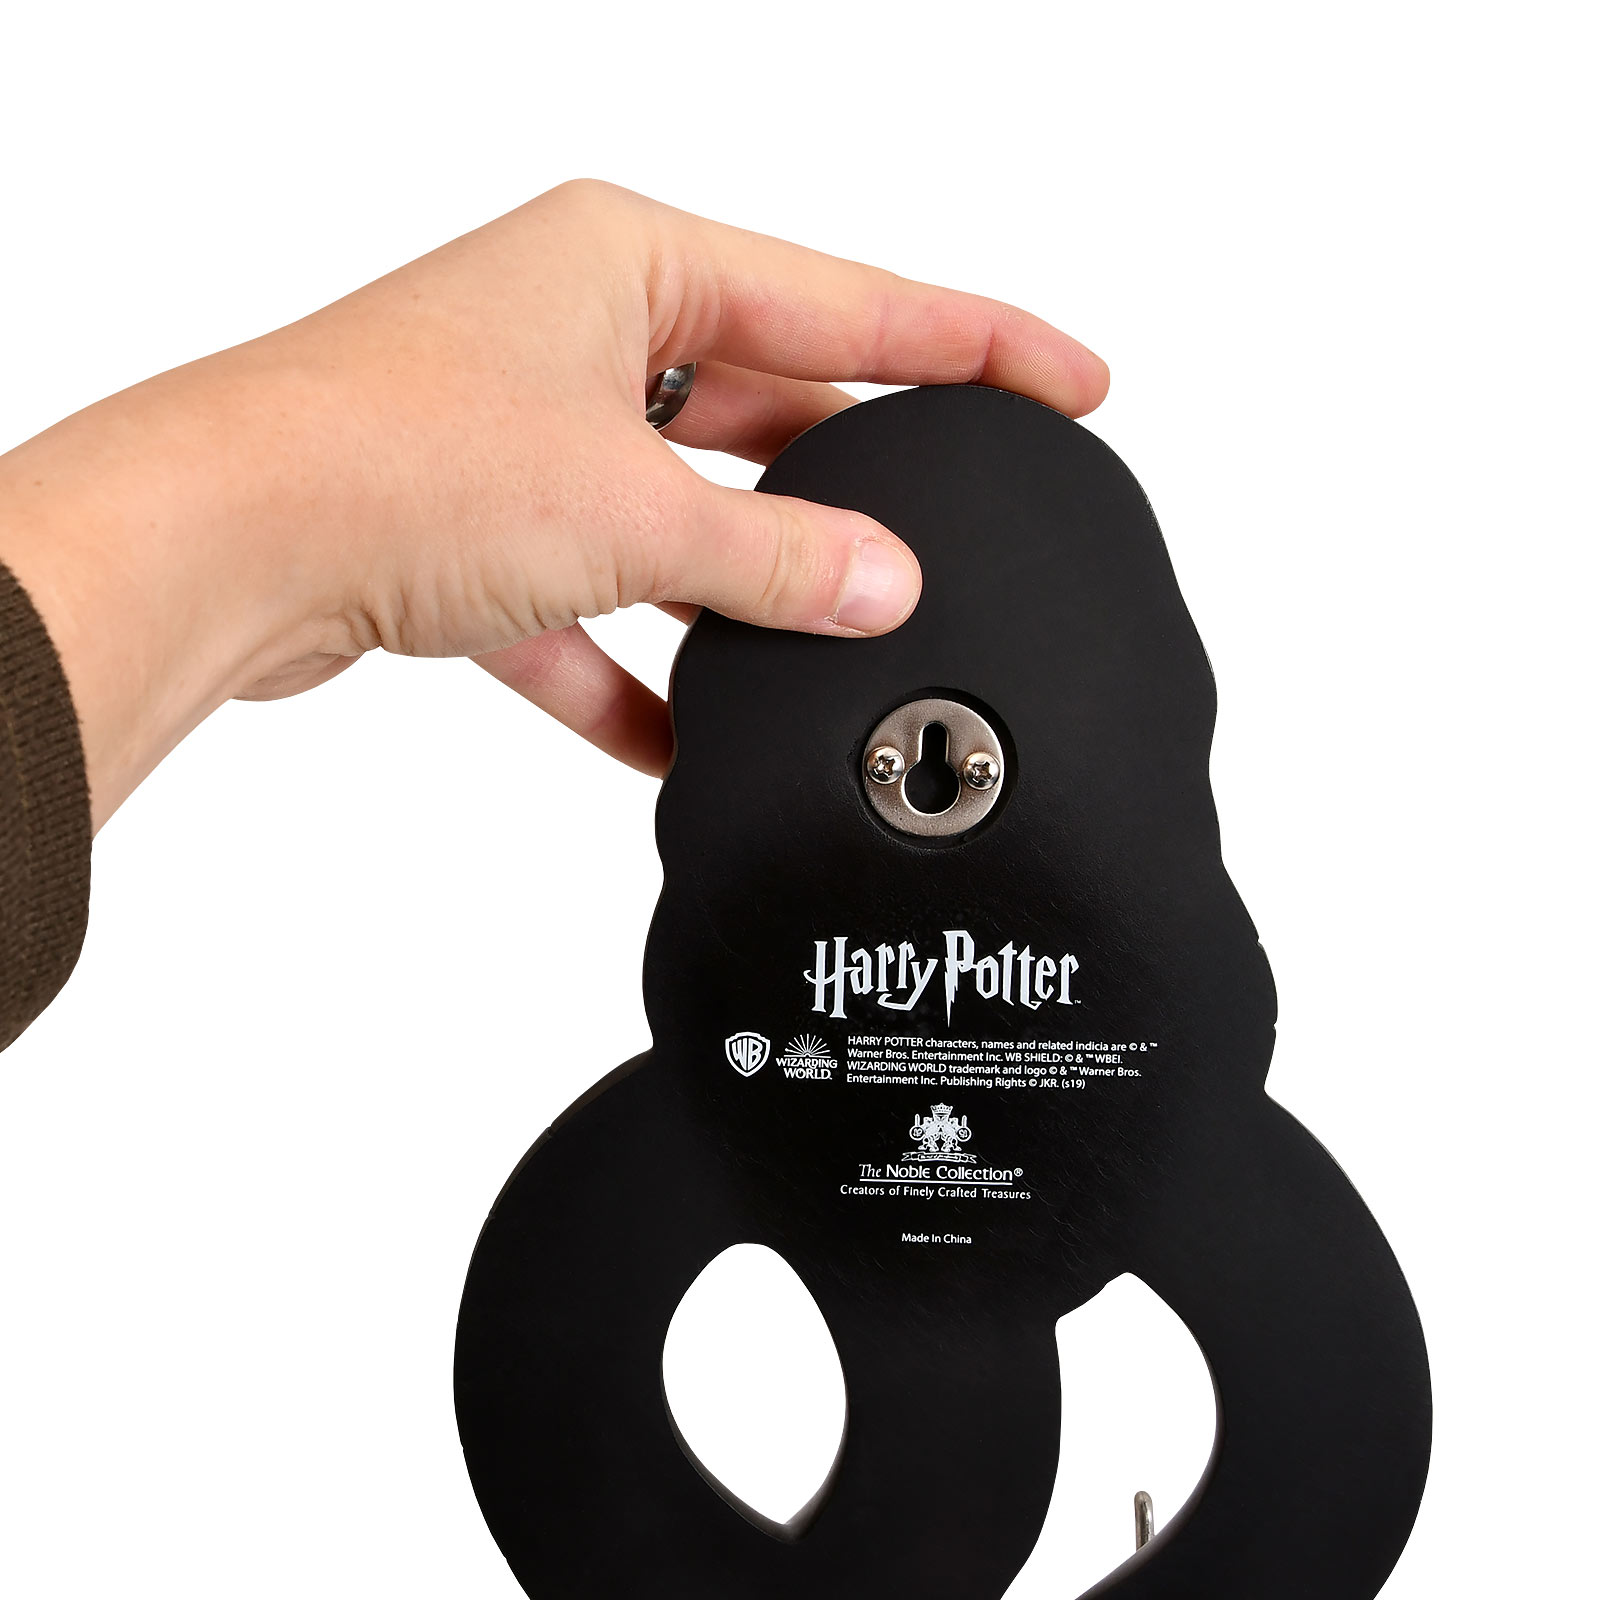 Harry Potter - Donkere Tovenaars Toverstok Collectie